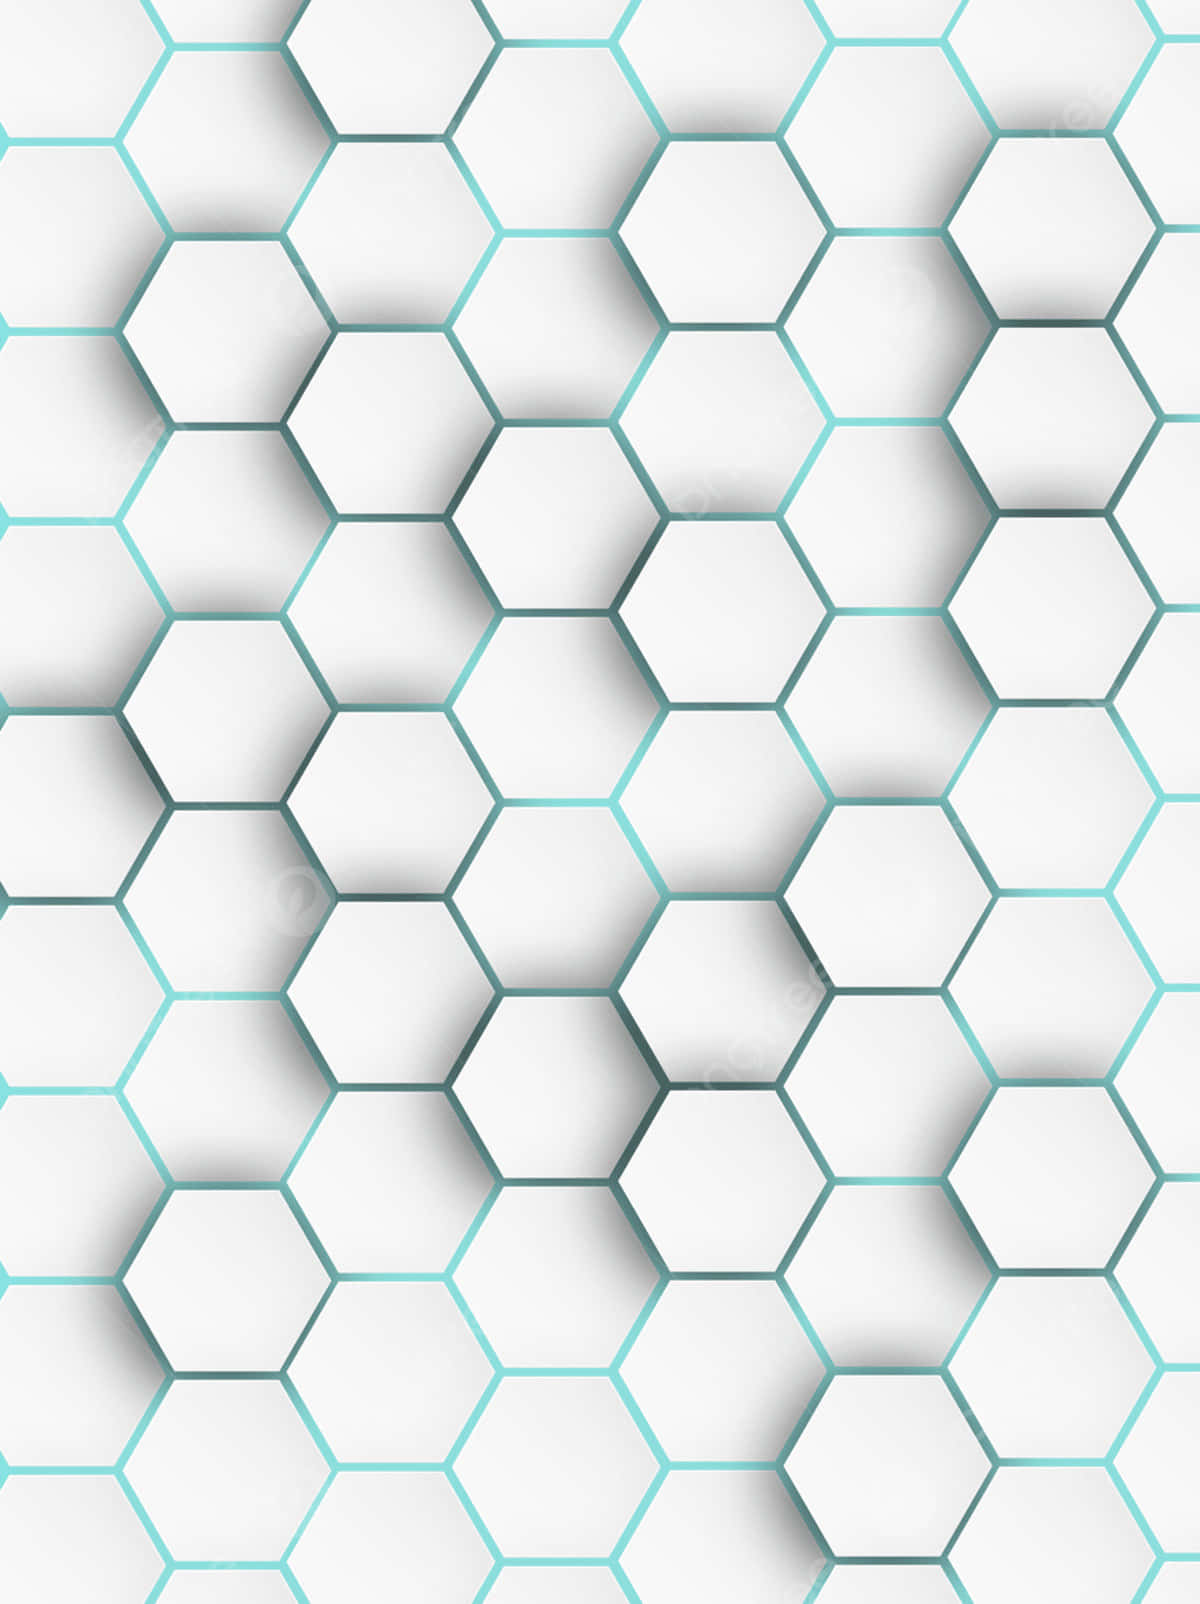 Hexagon Pictures